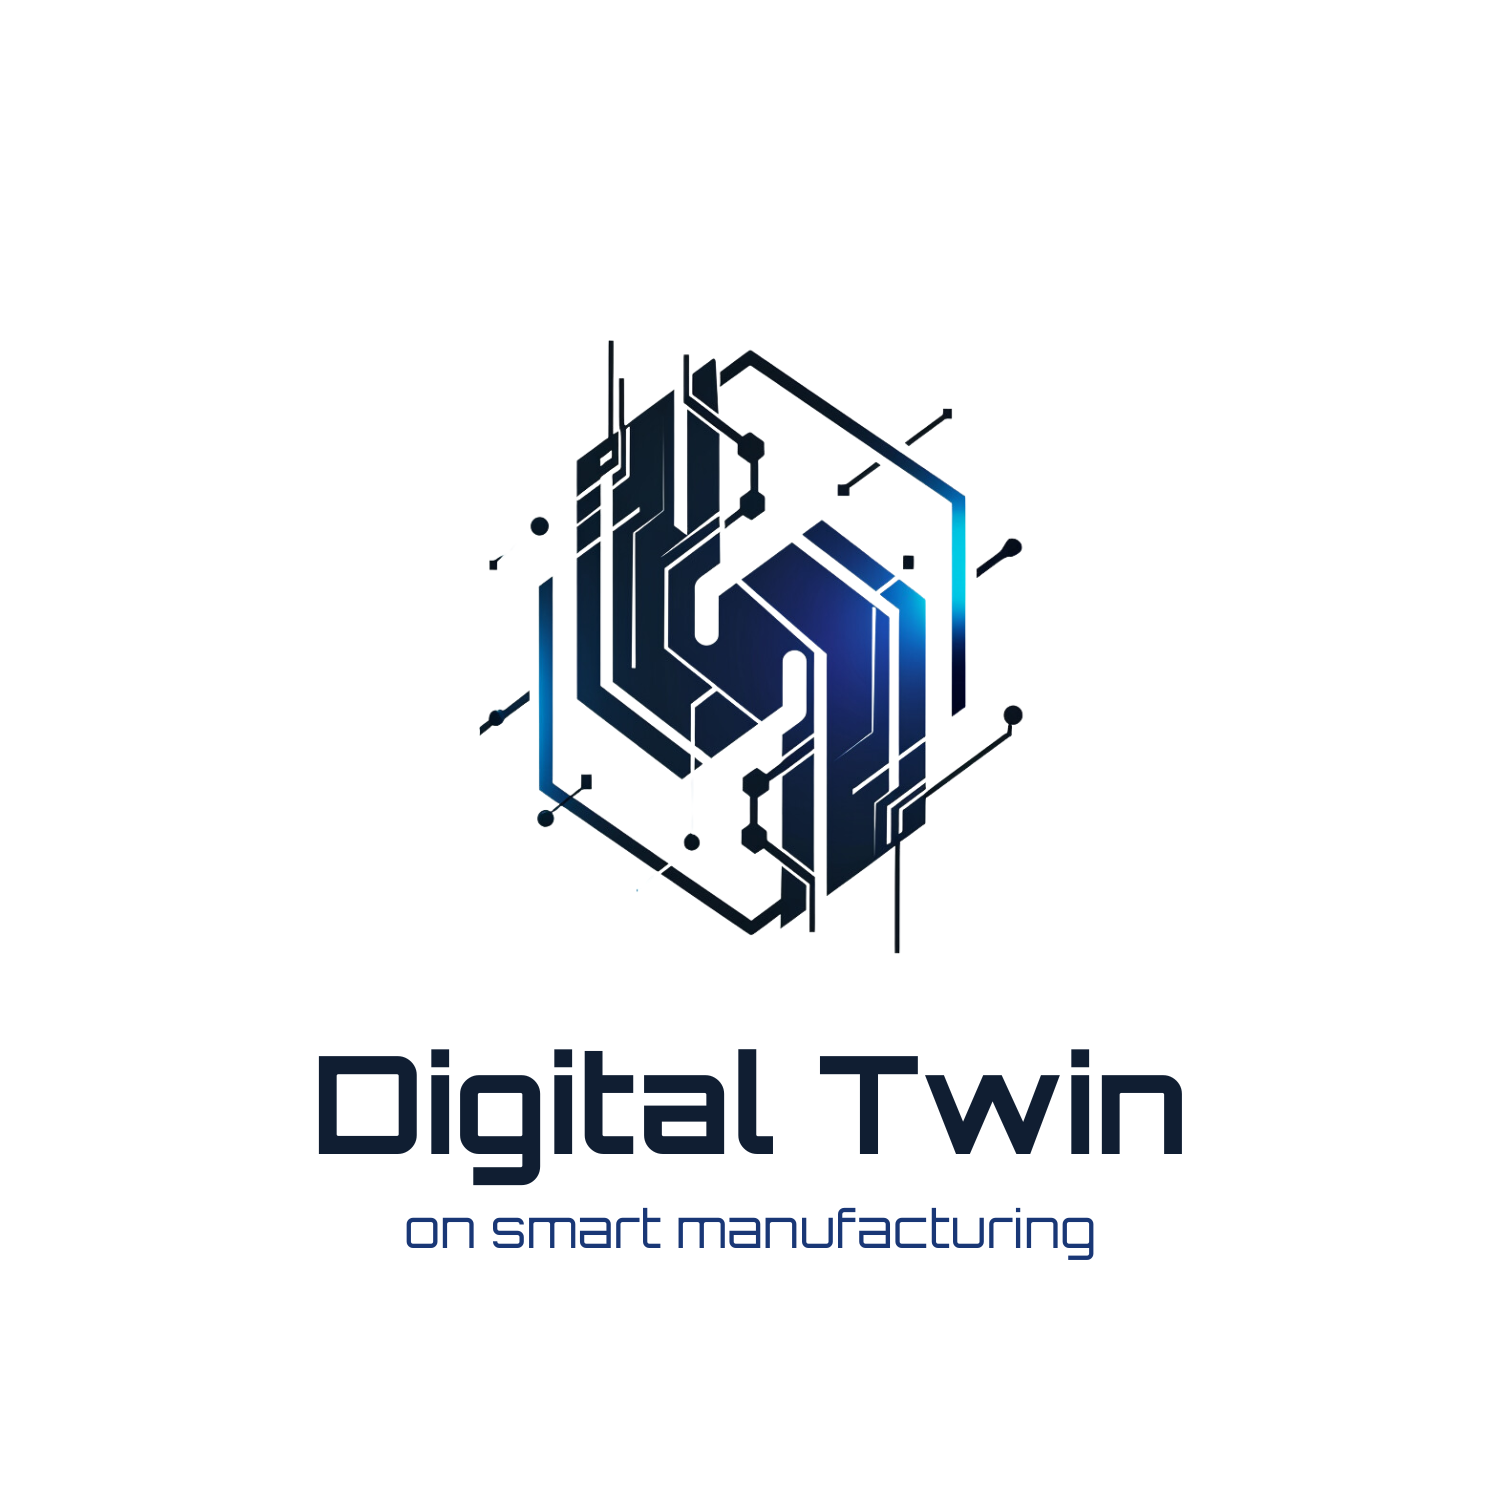 Digital Twin – Digital twins for intelligent production